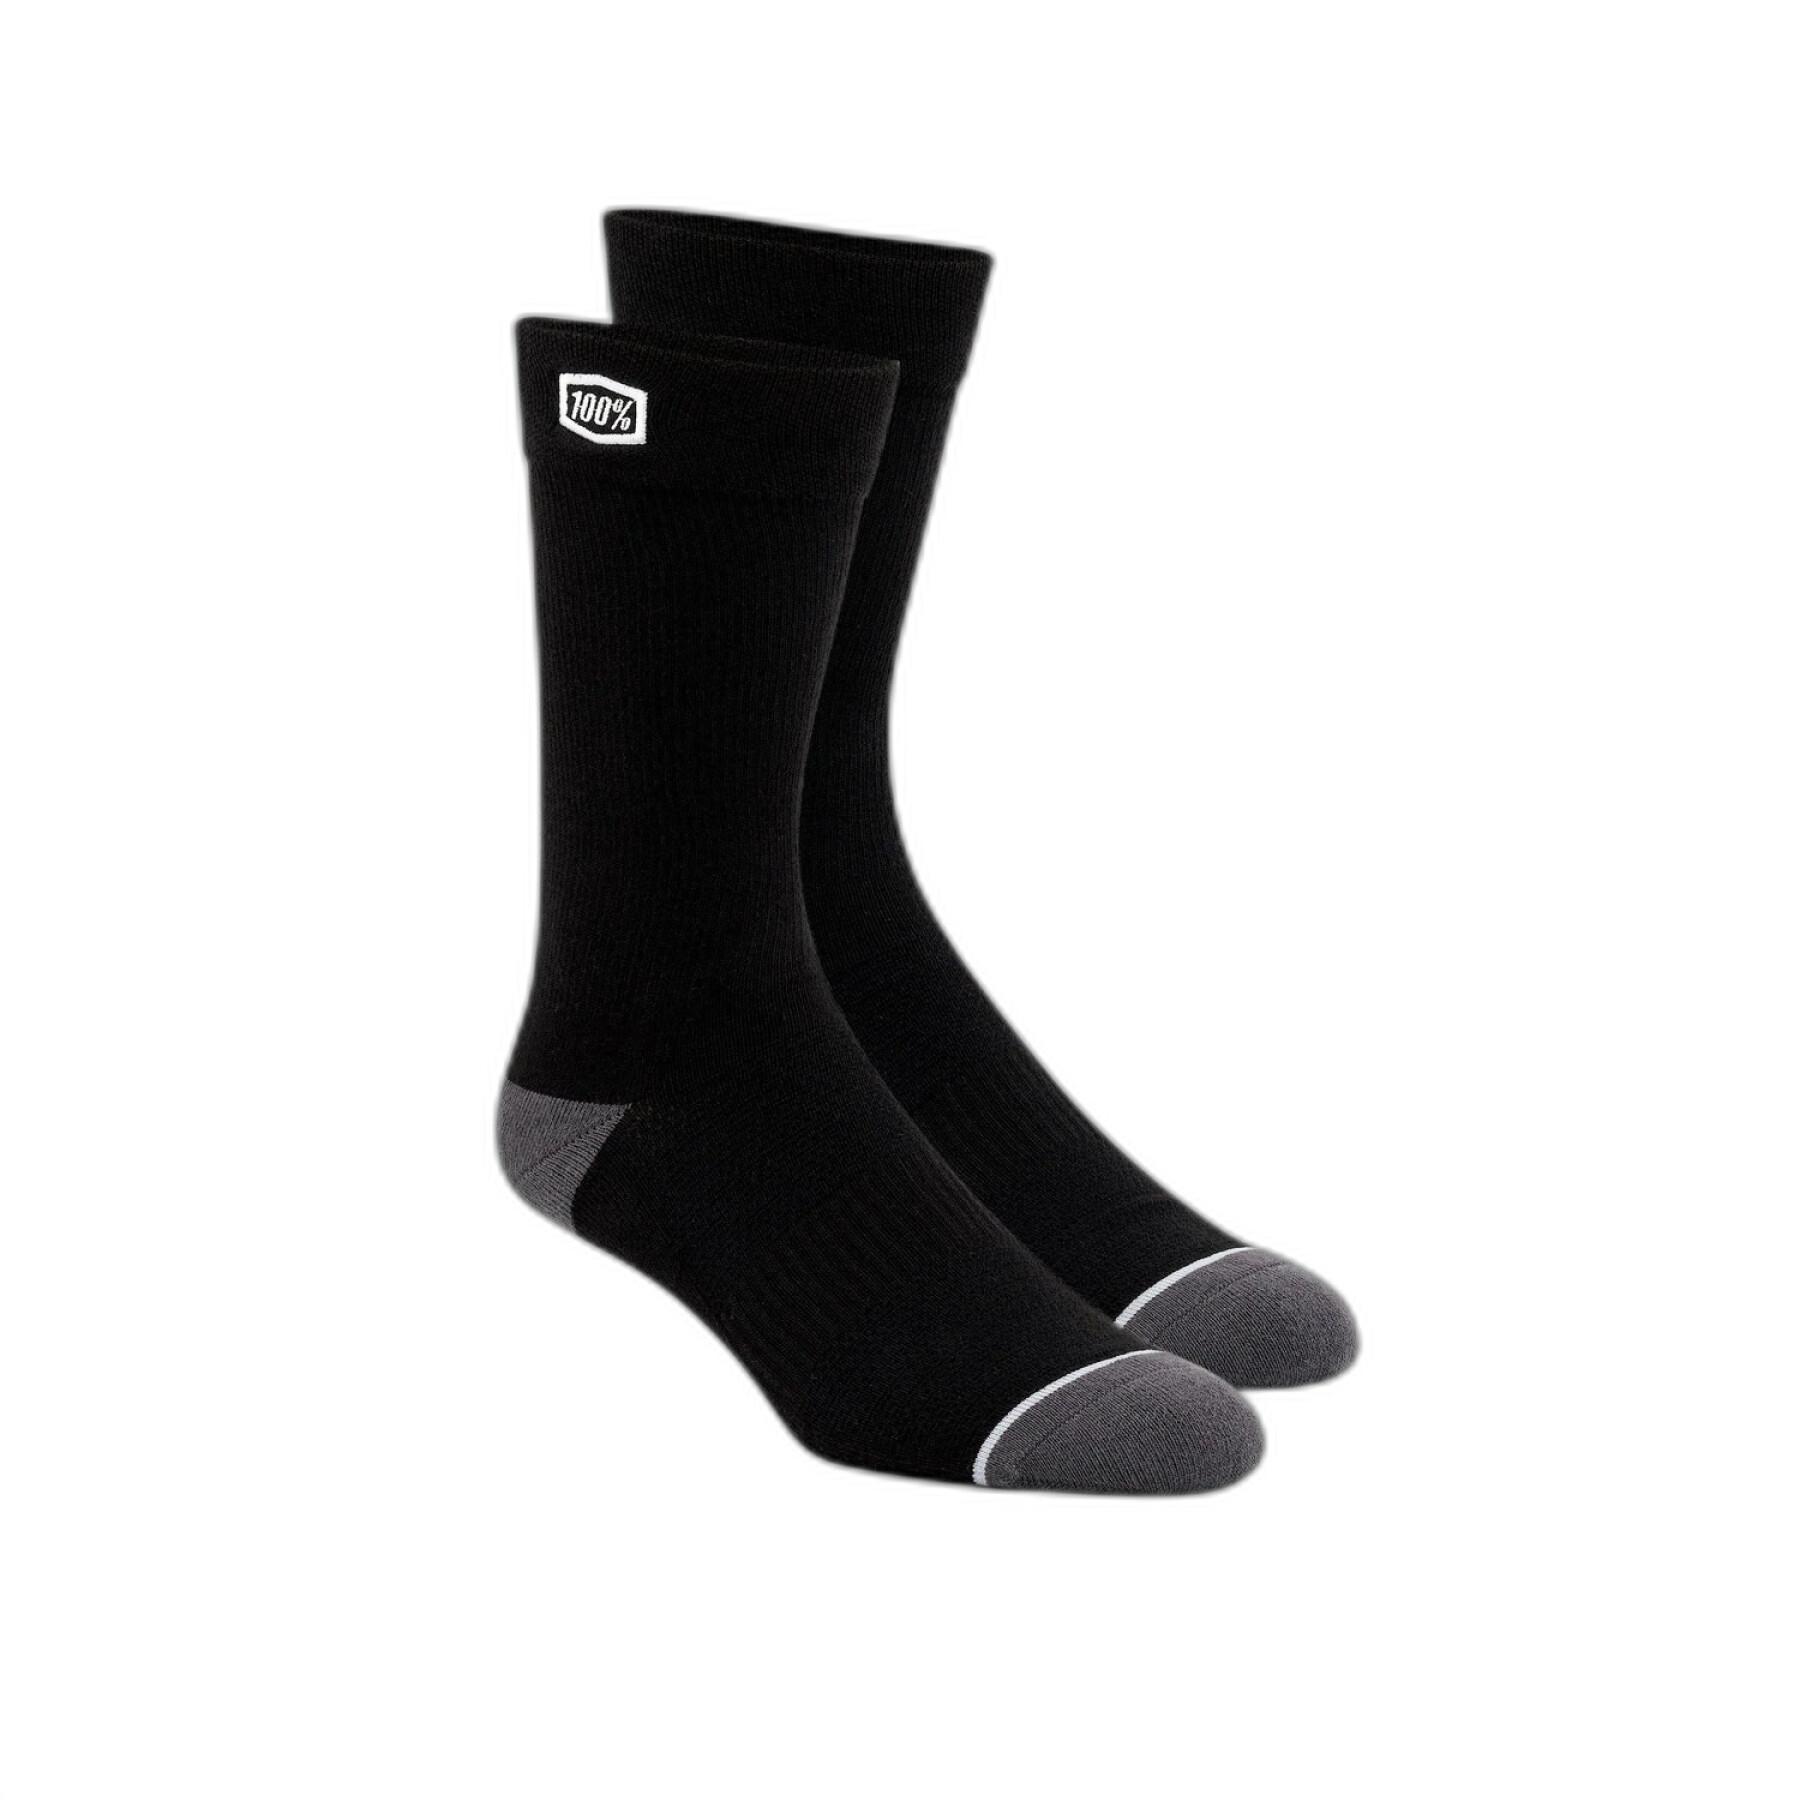 Casual socks 100% solid